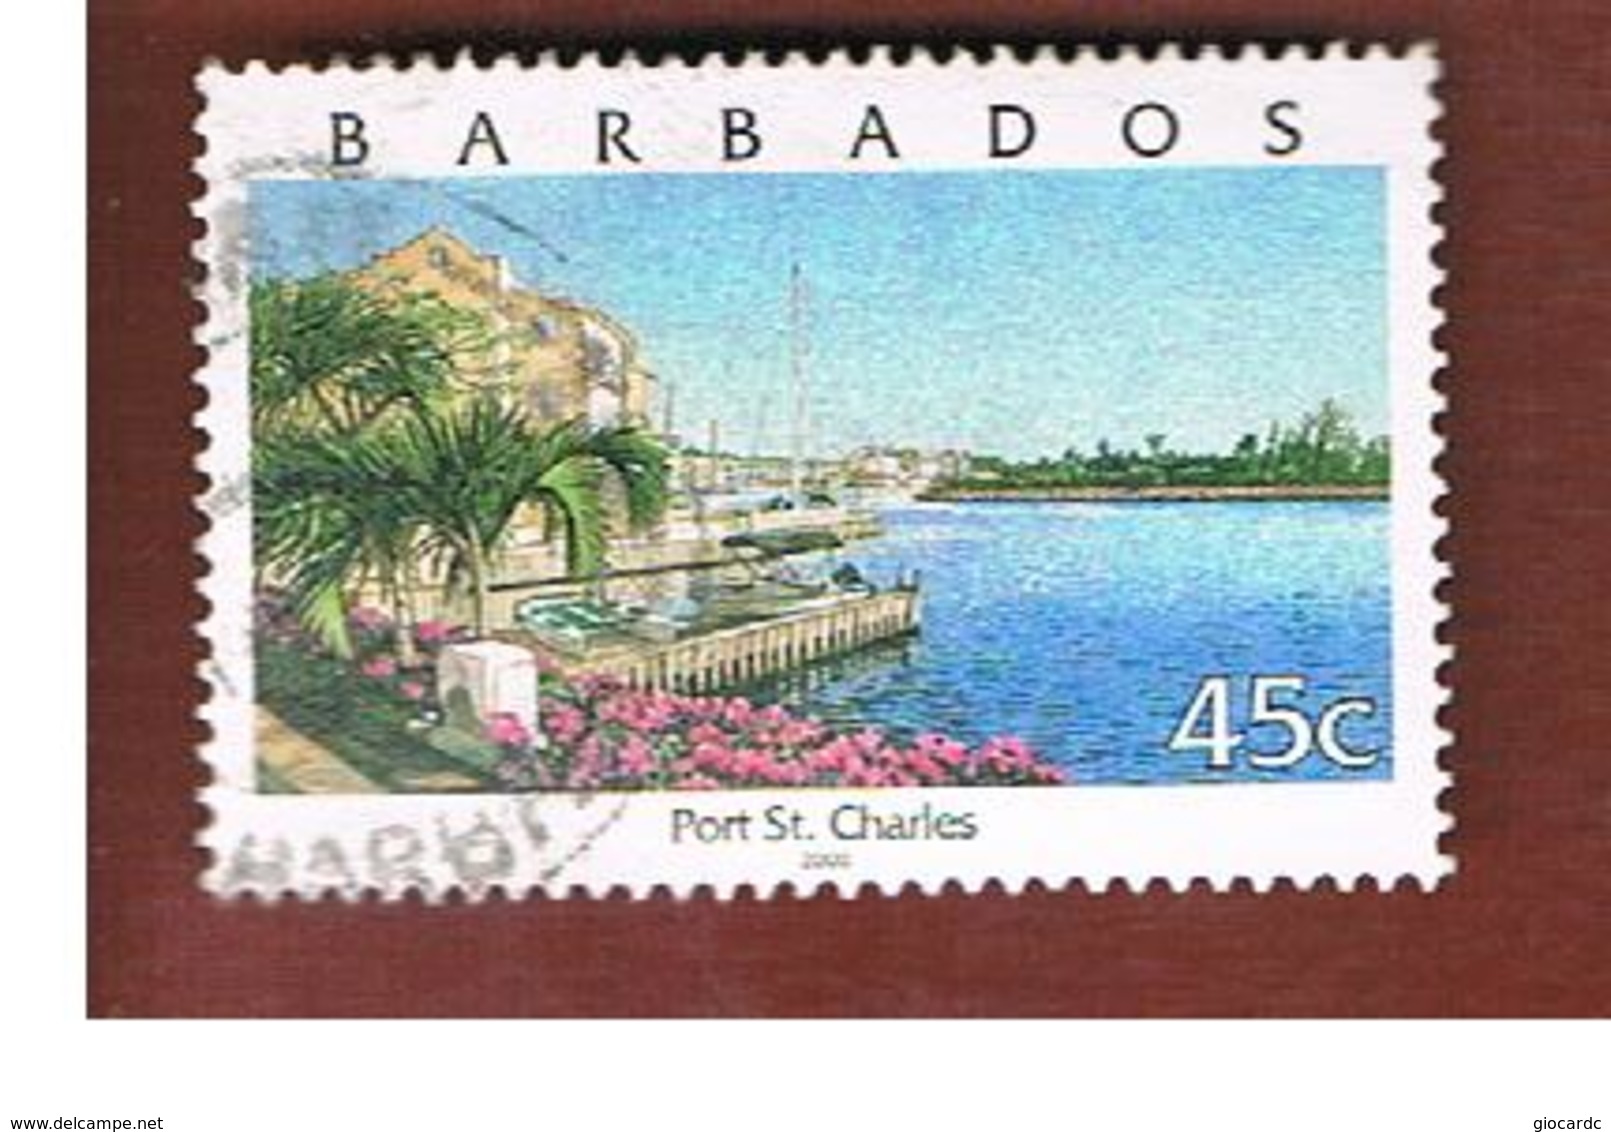 BARBADOS - MI 974  -   2000  PORT ST. CHARLES                                   -  USED° - Barbados (1966-...)